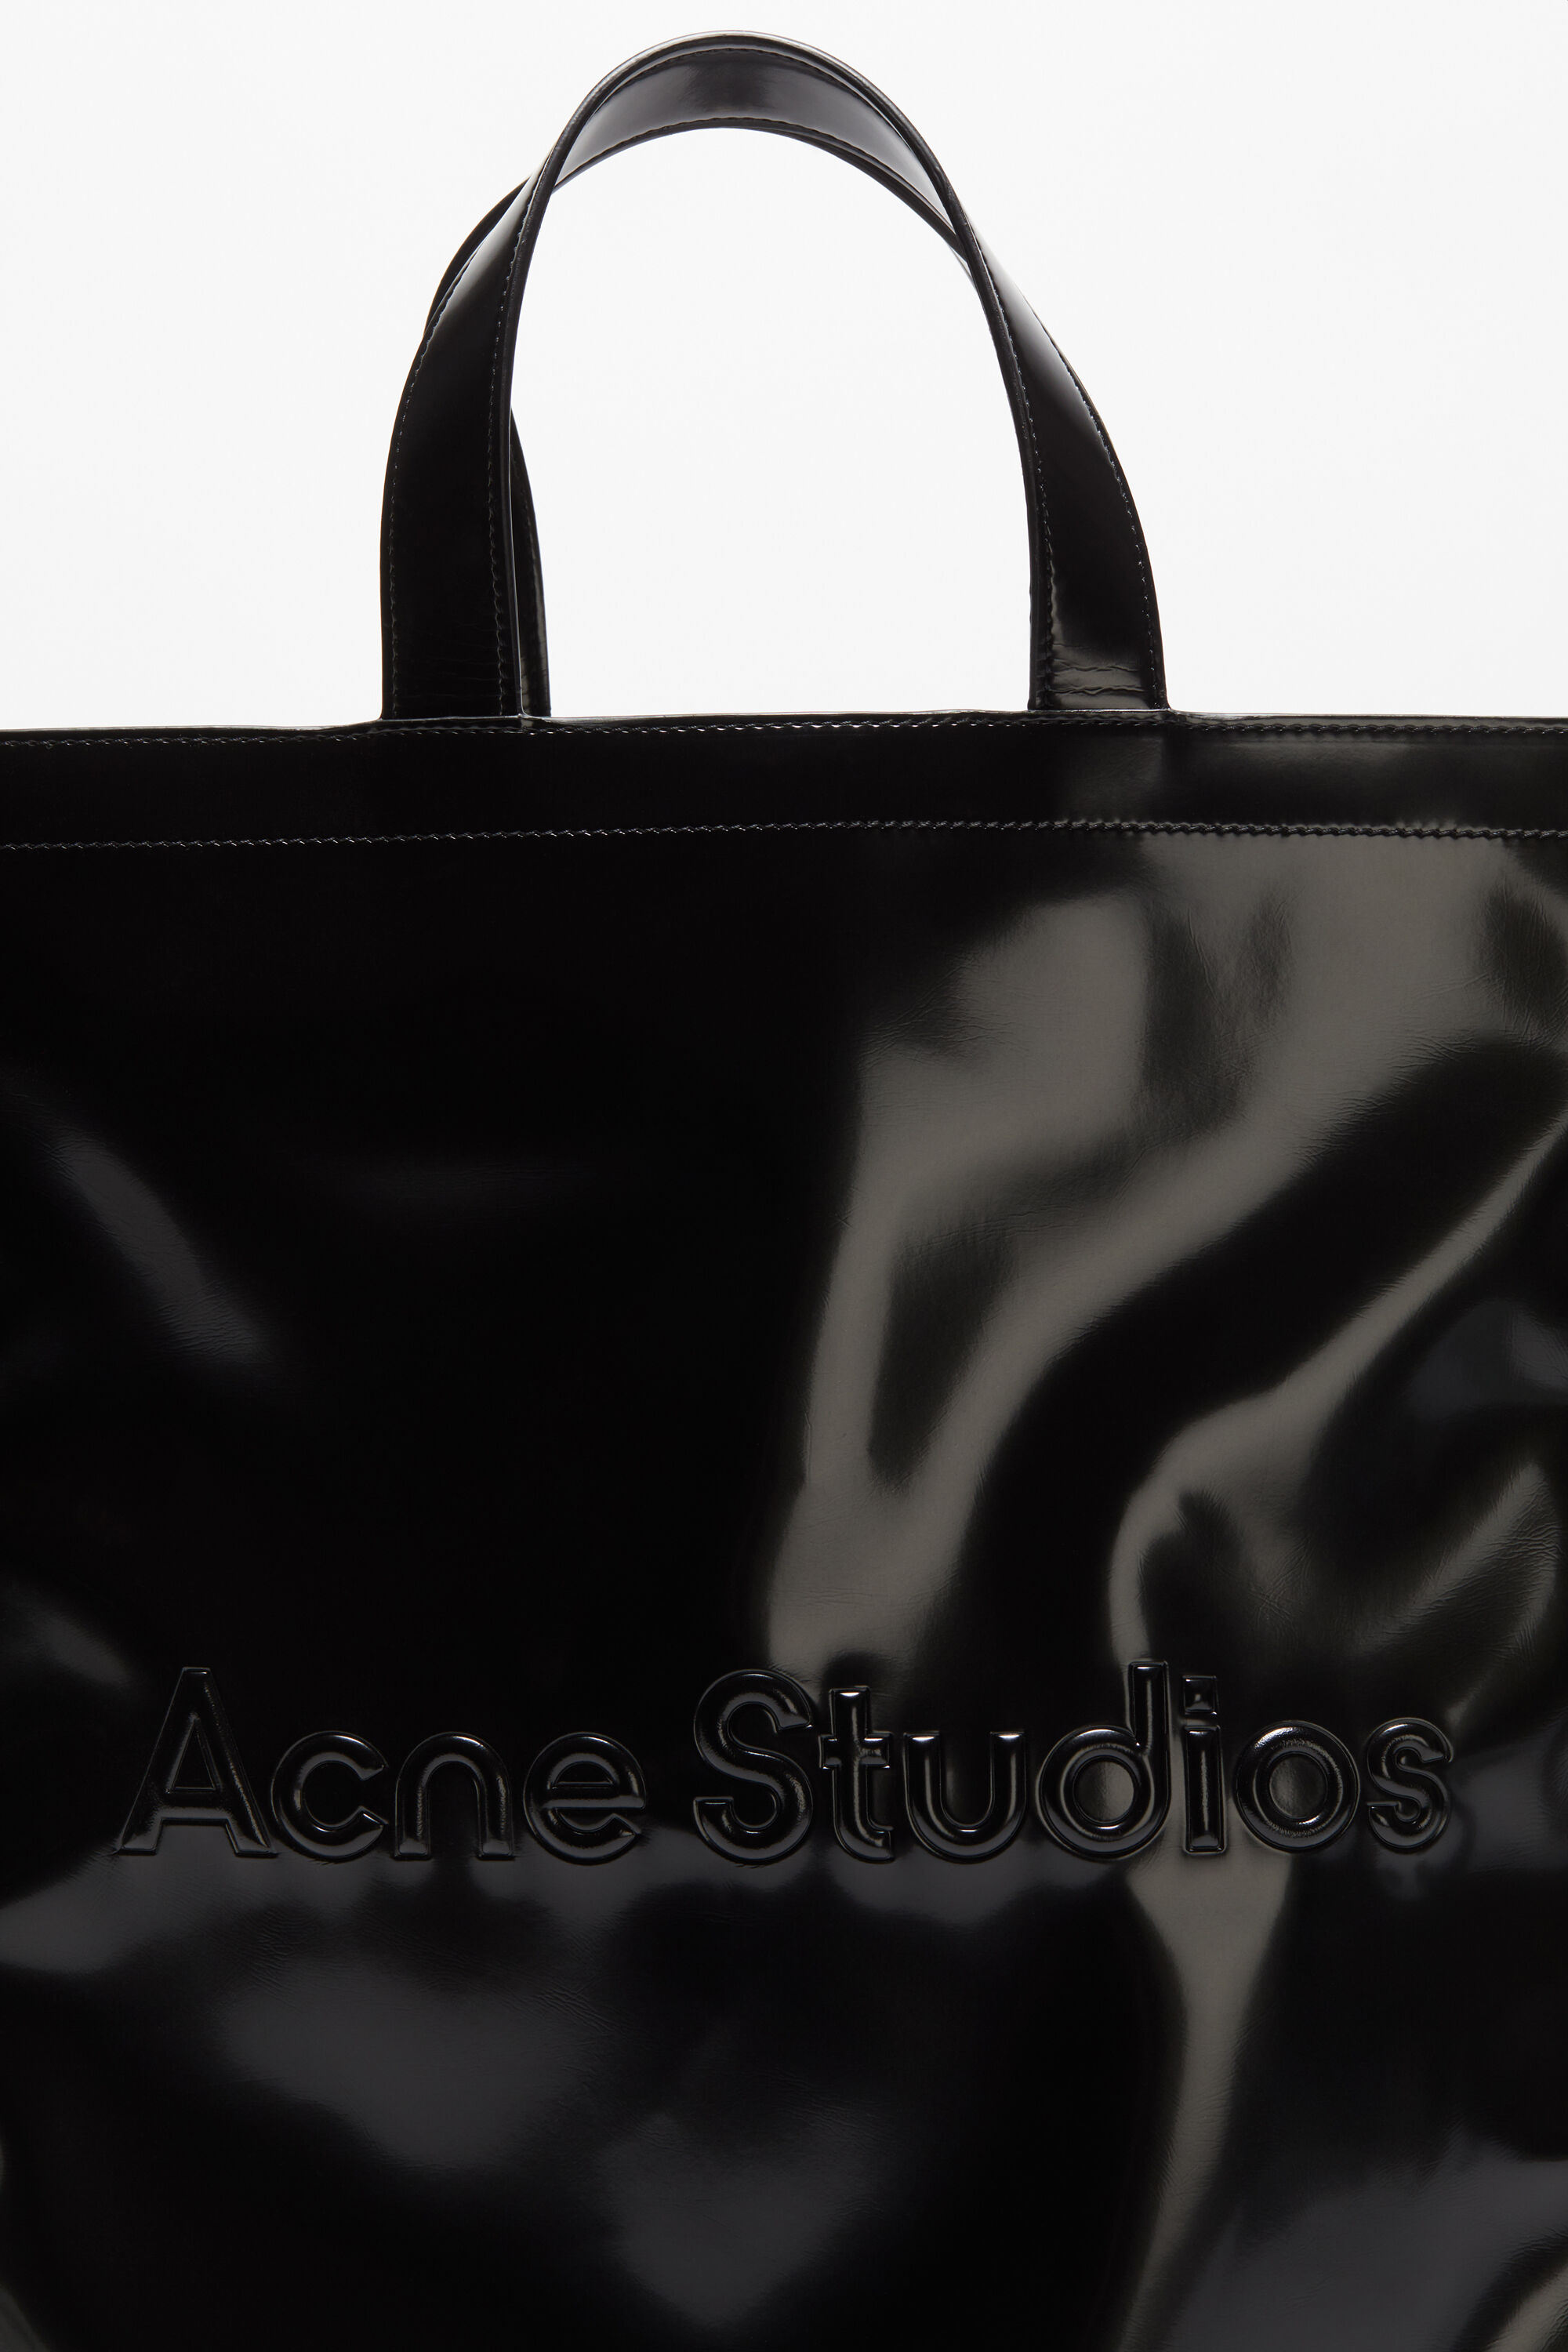 Acne Studios アクネストゥディオズ トートバッグ - 黒